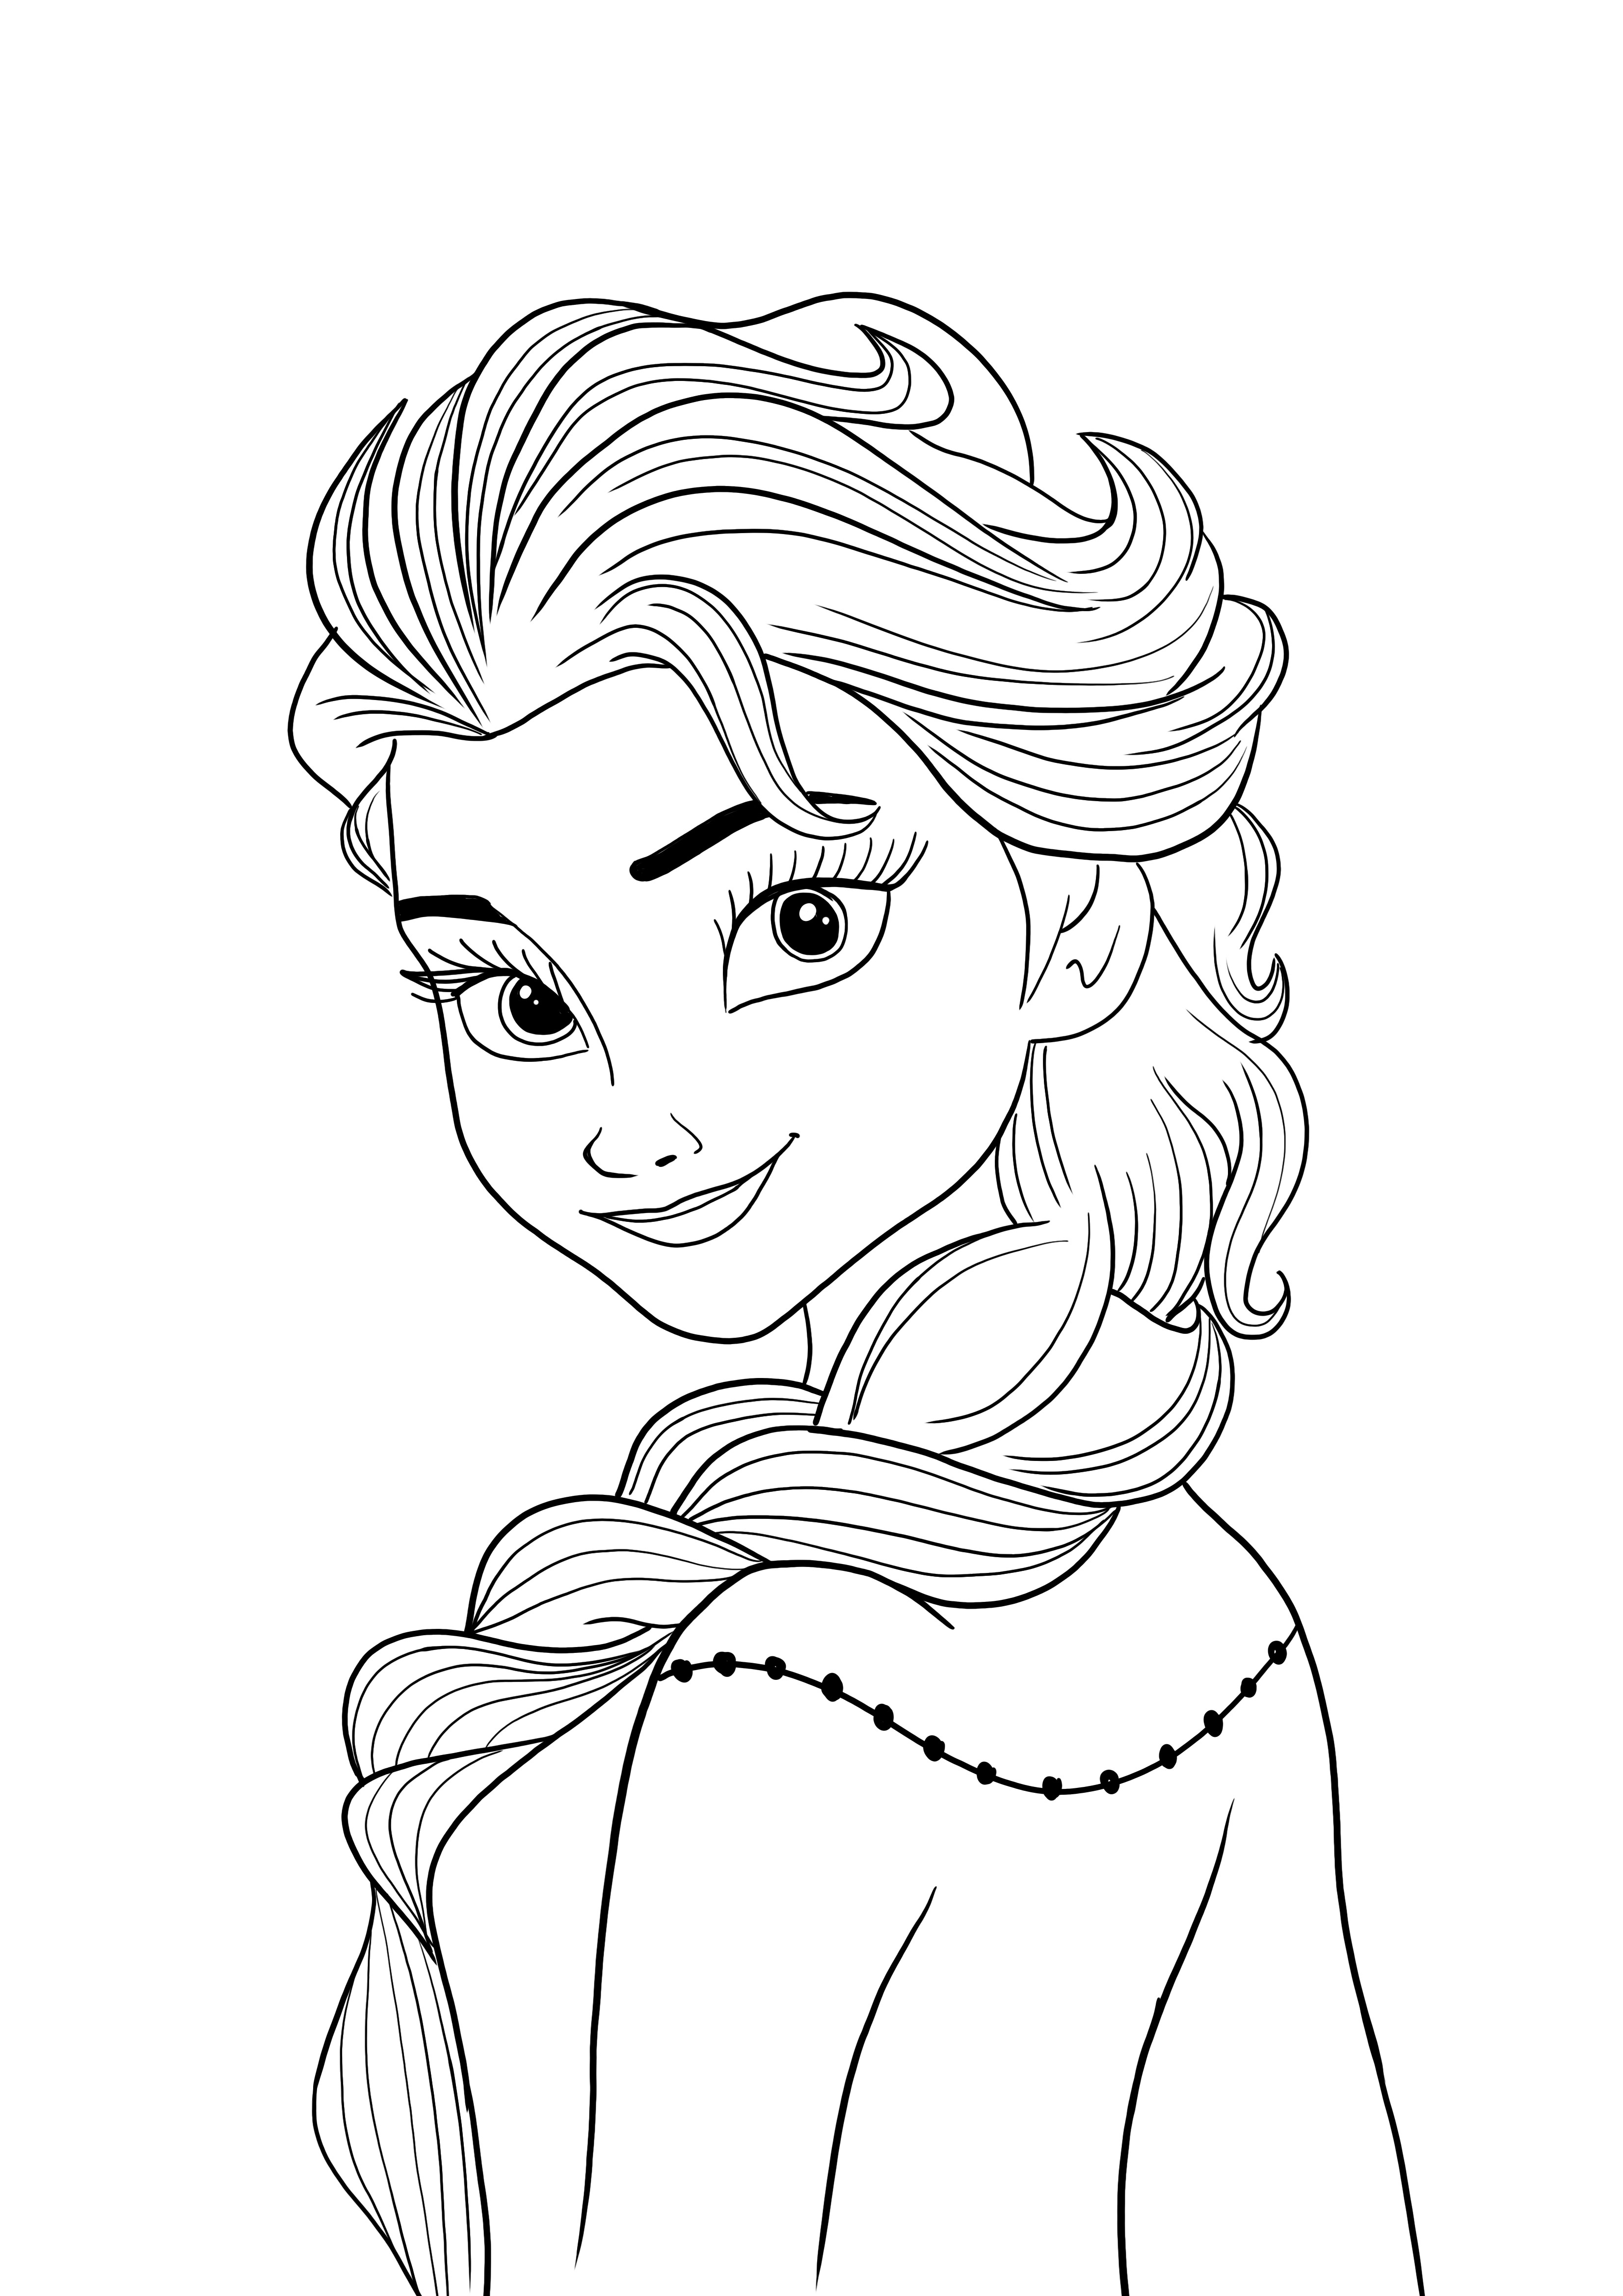 Dibujo de Elsa para colorear e imprimir gratis.